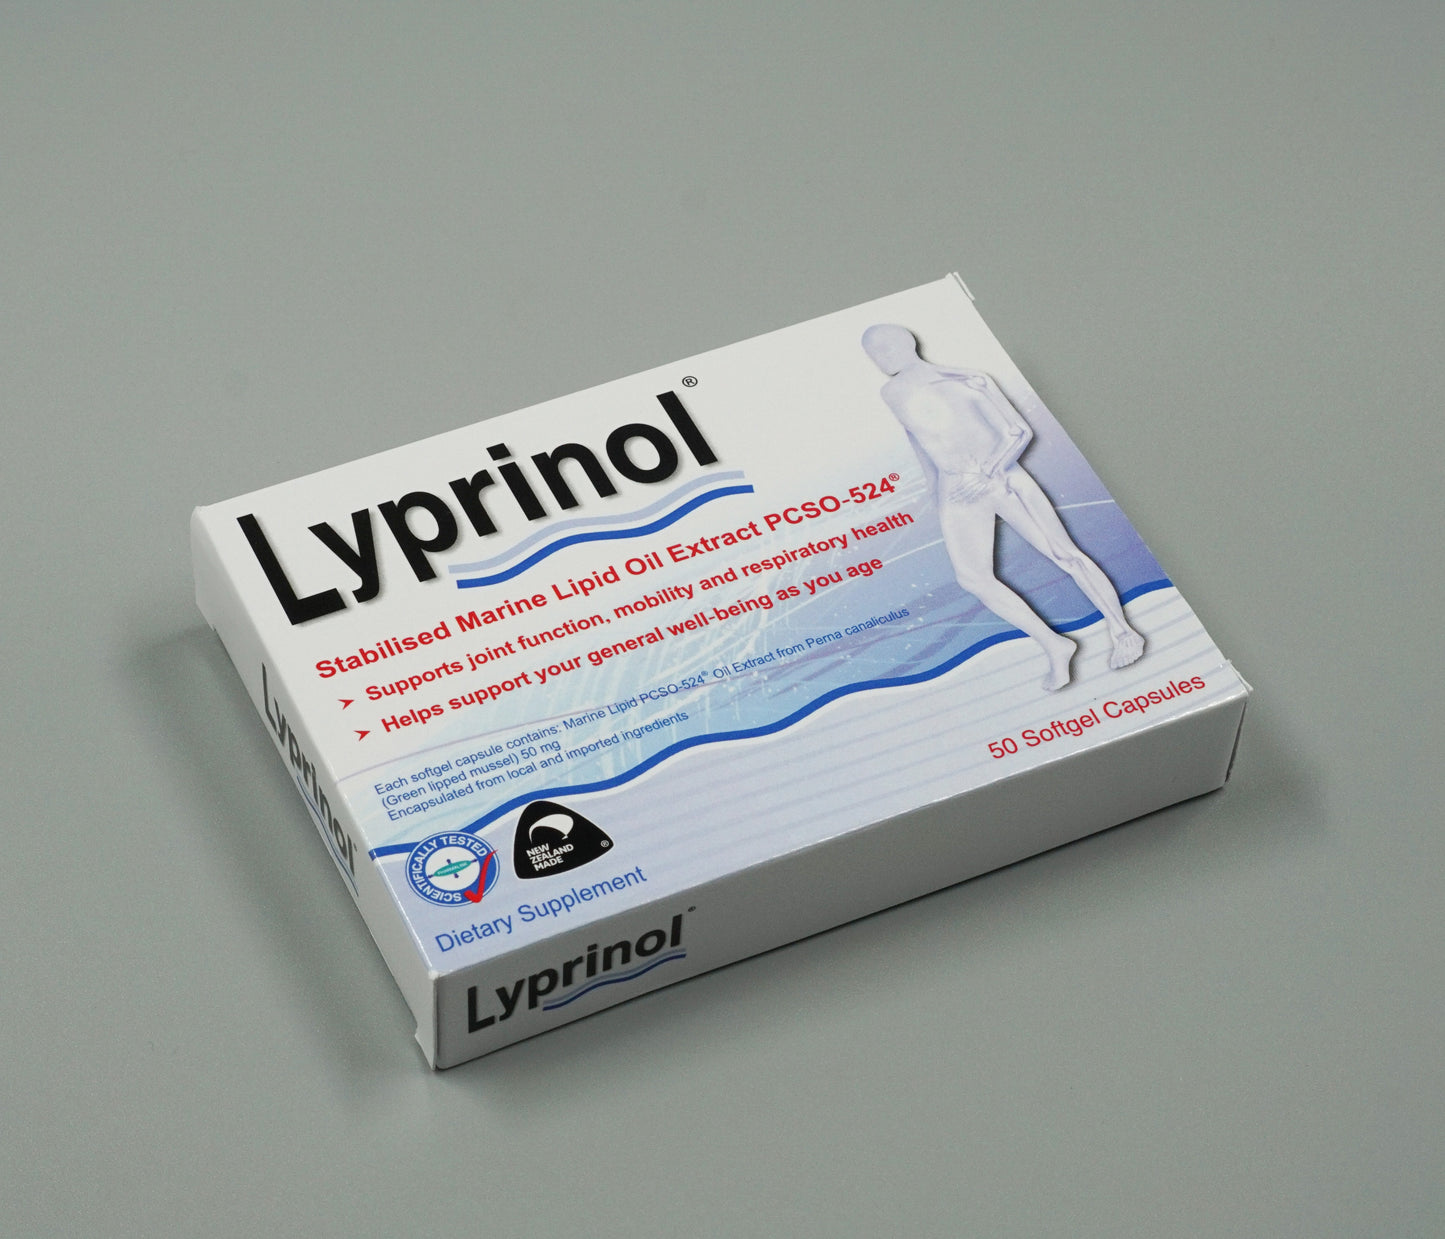 Lyprinol® PCSO-524®